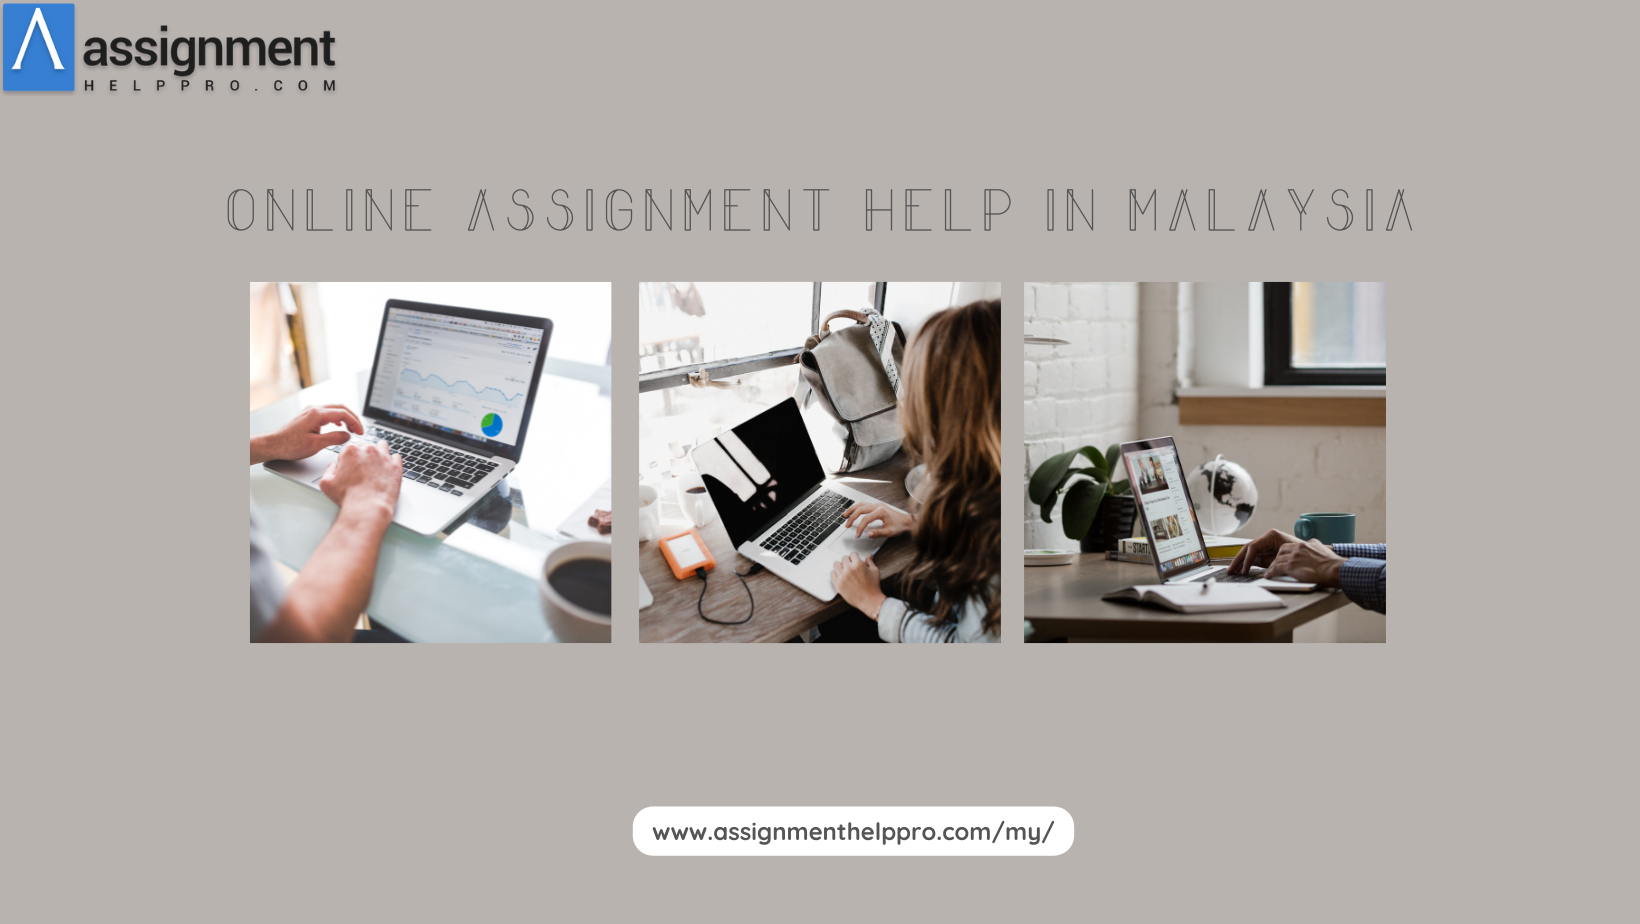 assignment company malaysia